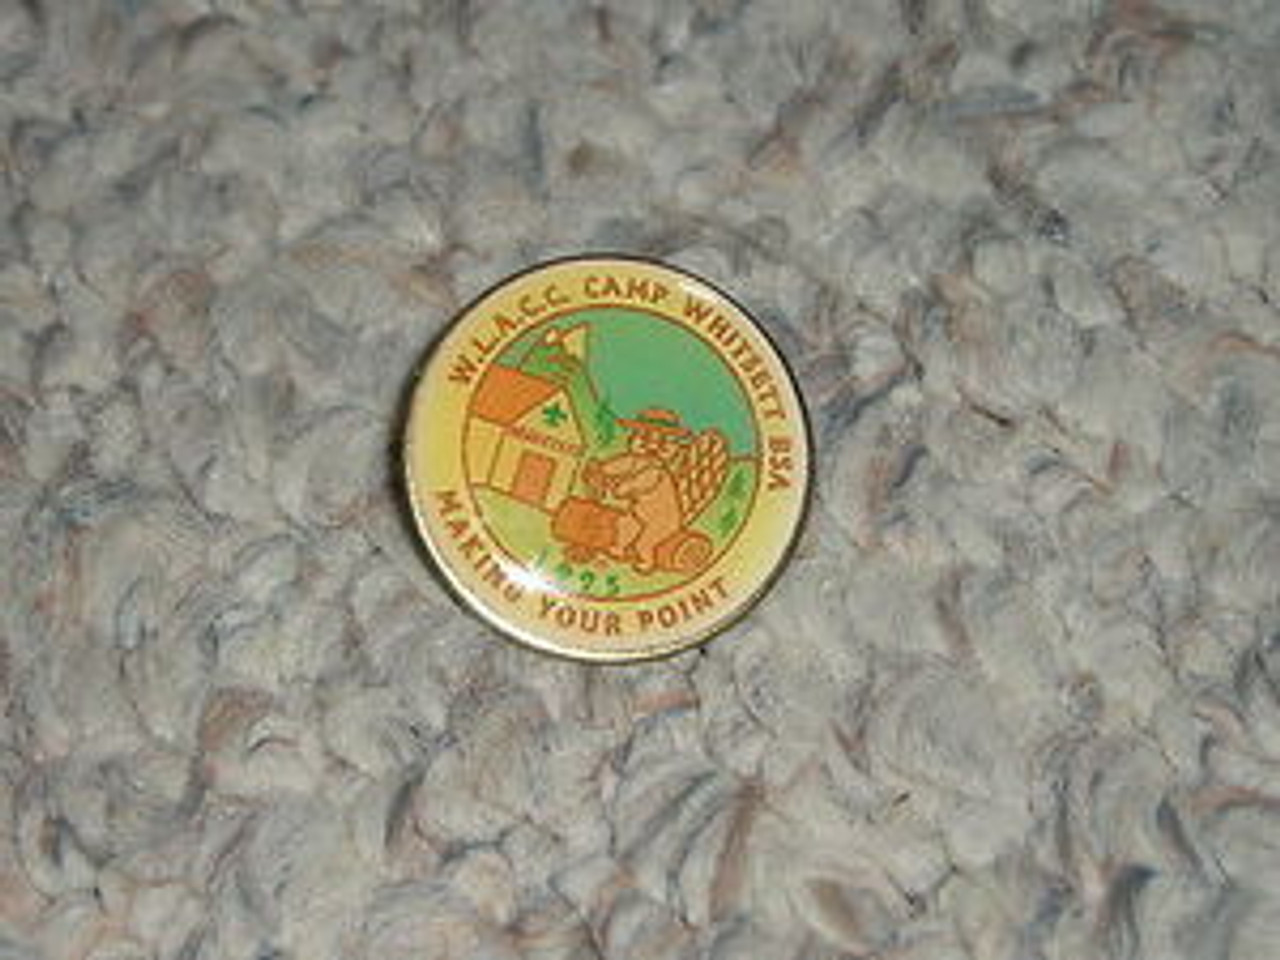 1995 Camp Whitsett Pin - Scout